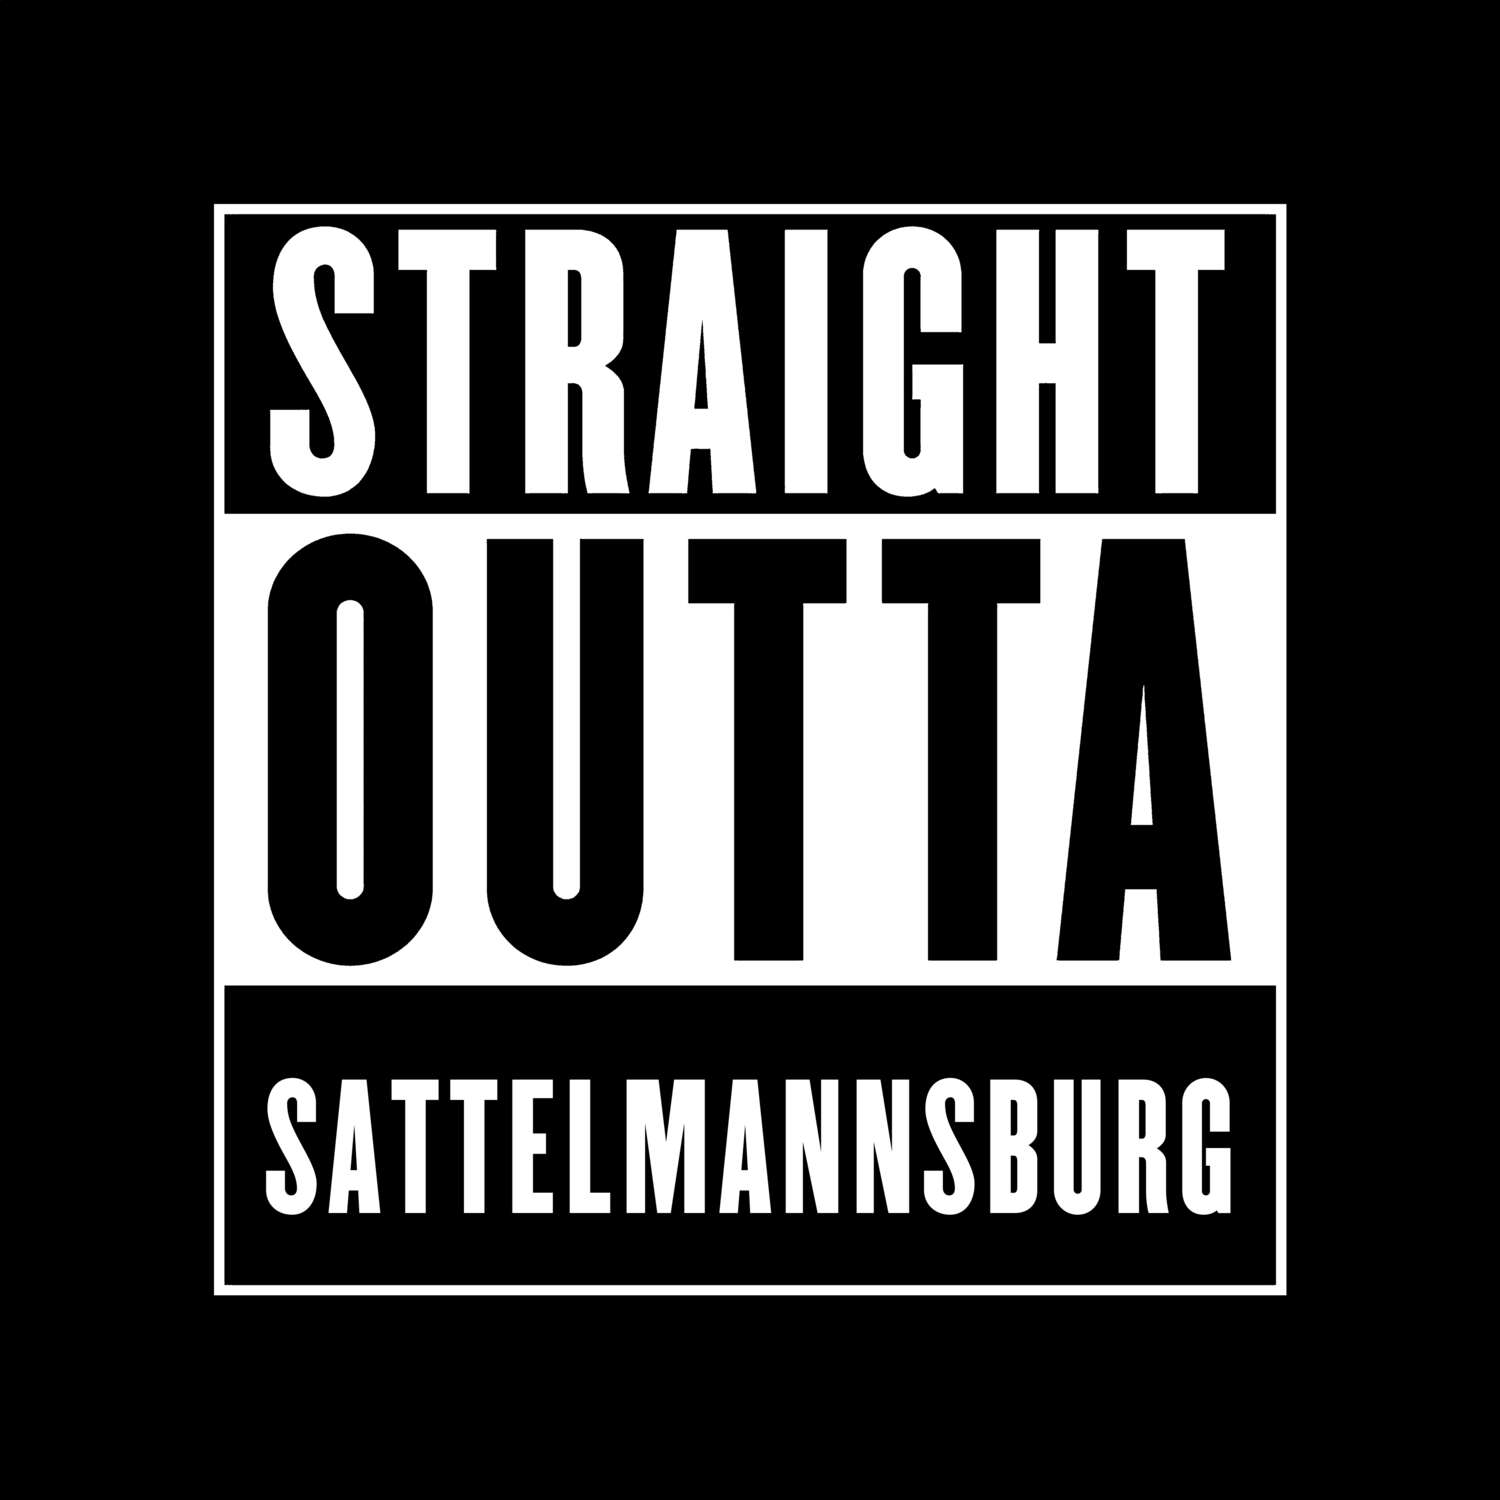 Sattelmannsburg T-Shirt »Straight Outta«